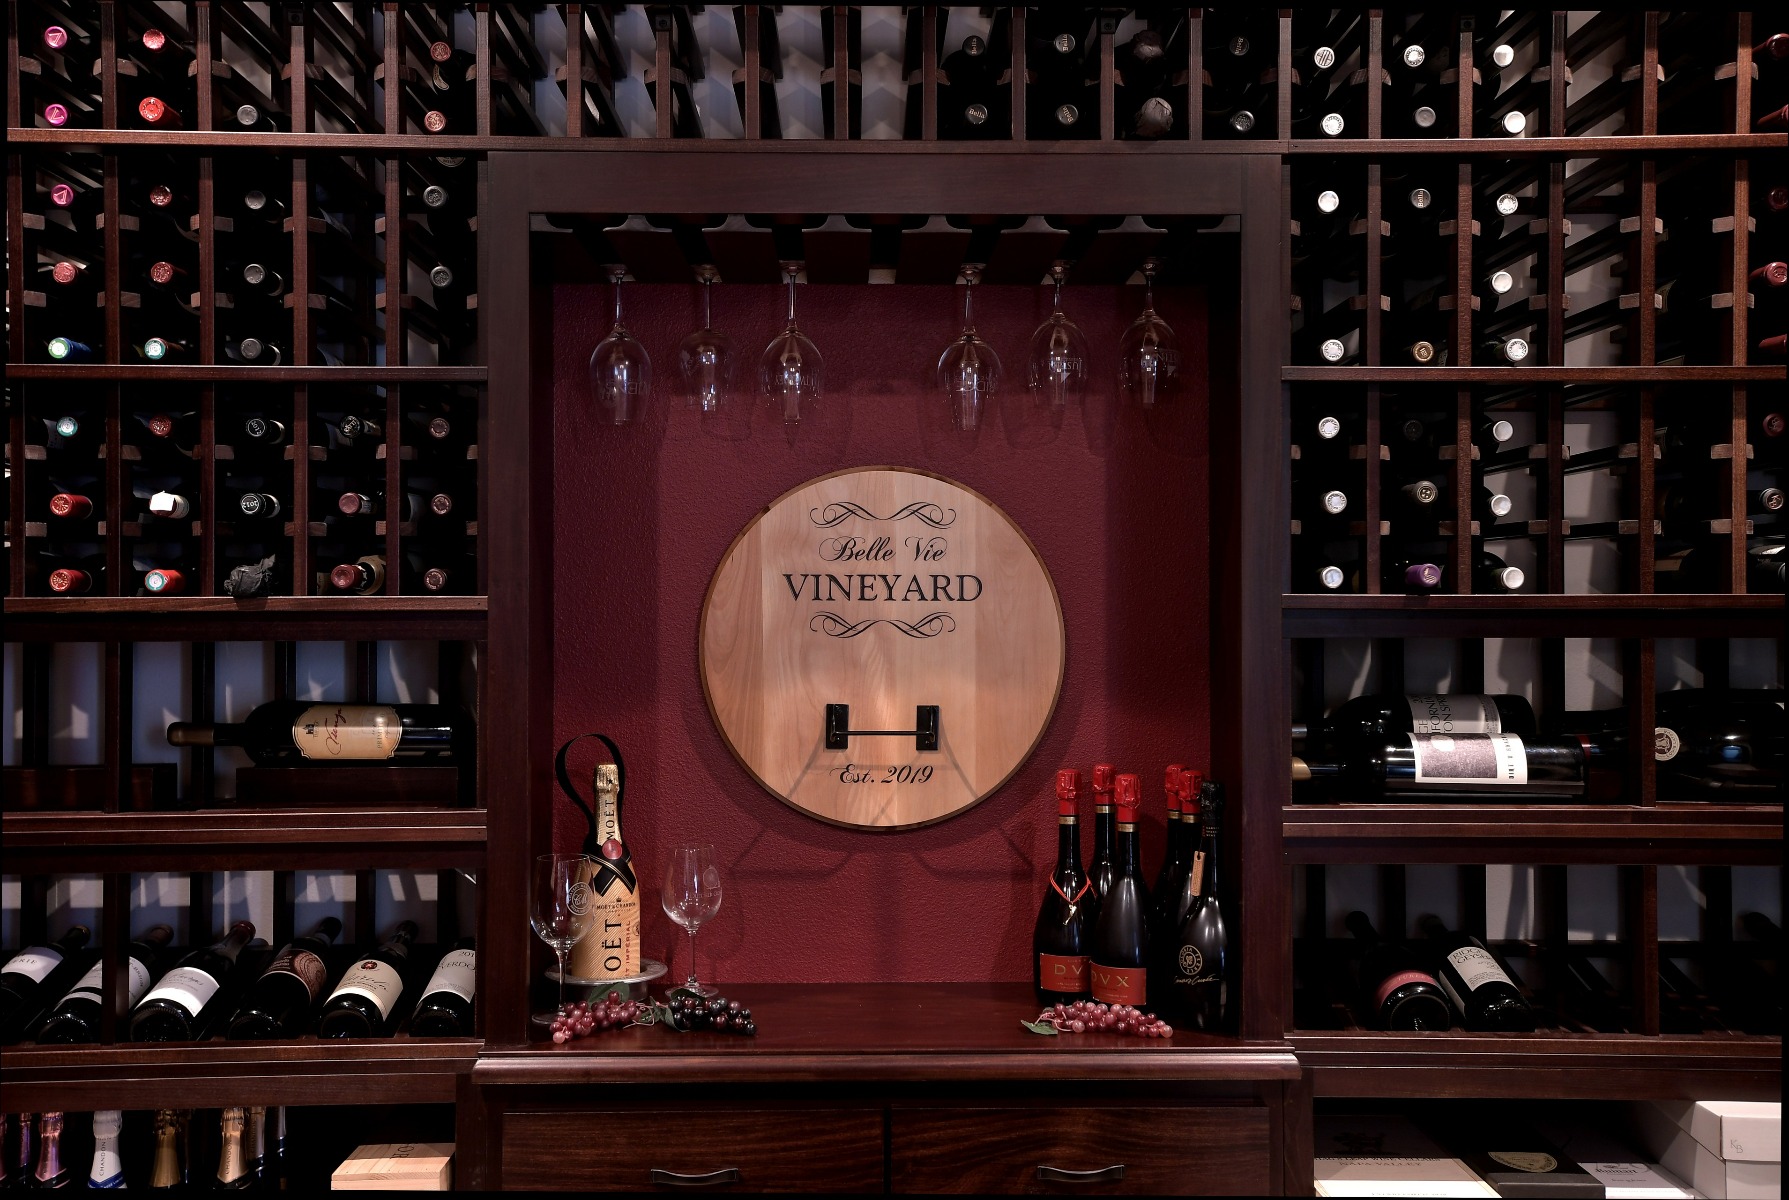 Custom wine cellar showpiece, featuring label forward design